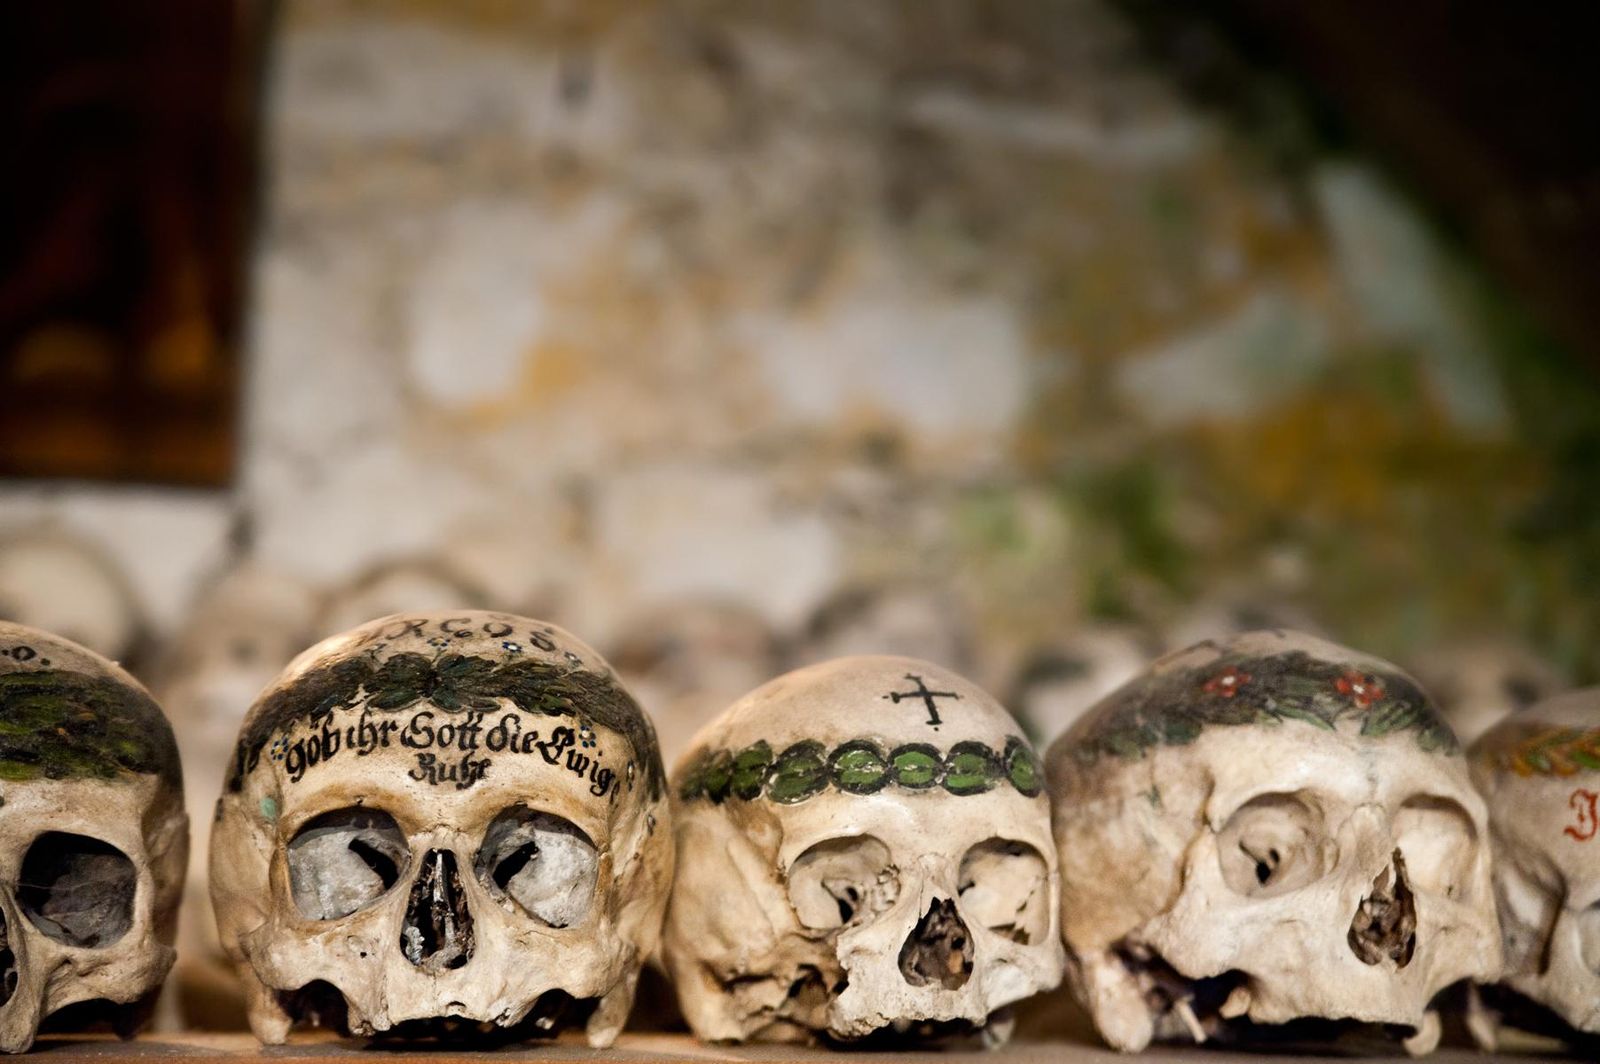 Inside Skull and Bones, Last Look